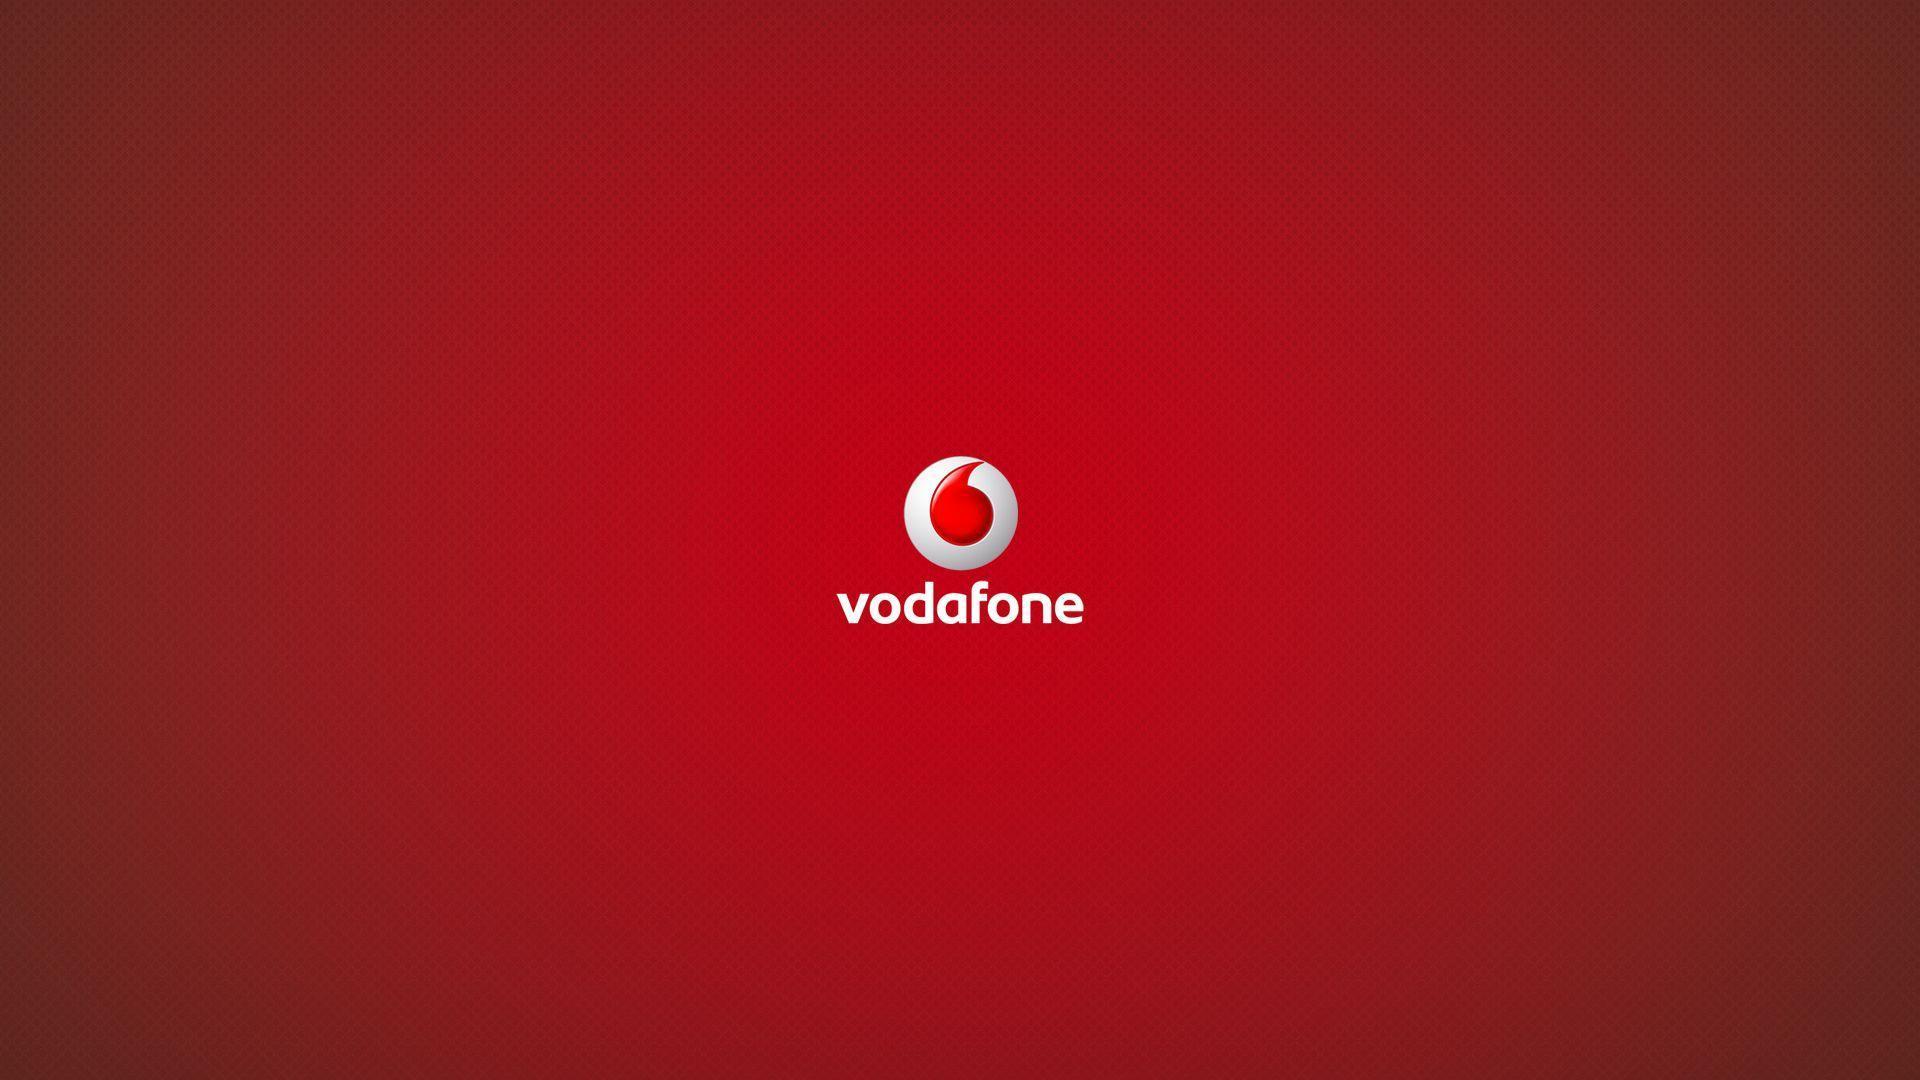 Vodafone Christmas Advert 2014 Theme Song. Movie Theme Songs & TV